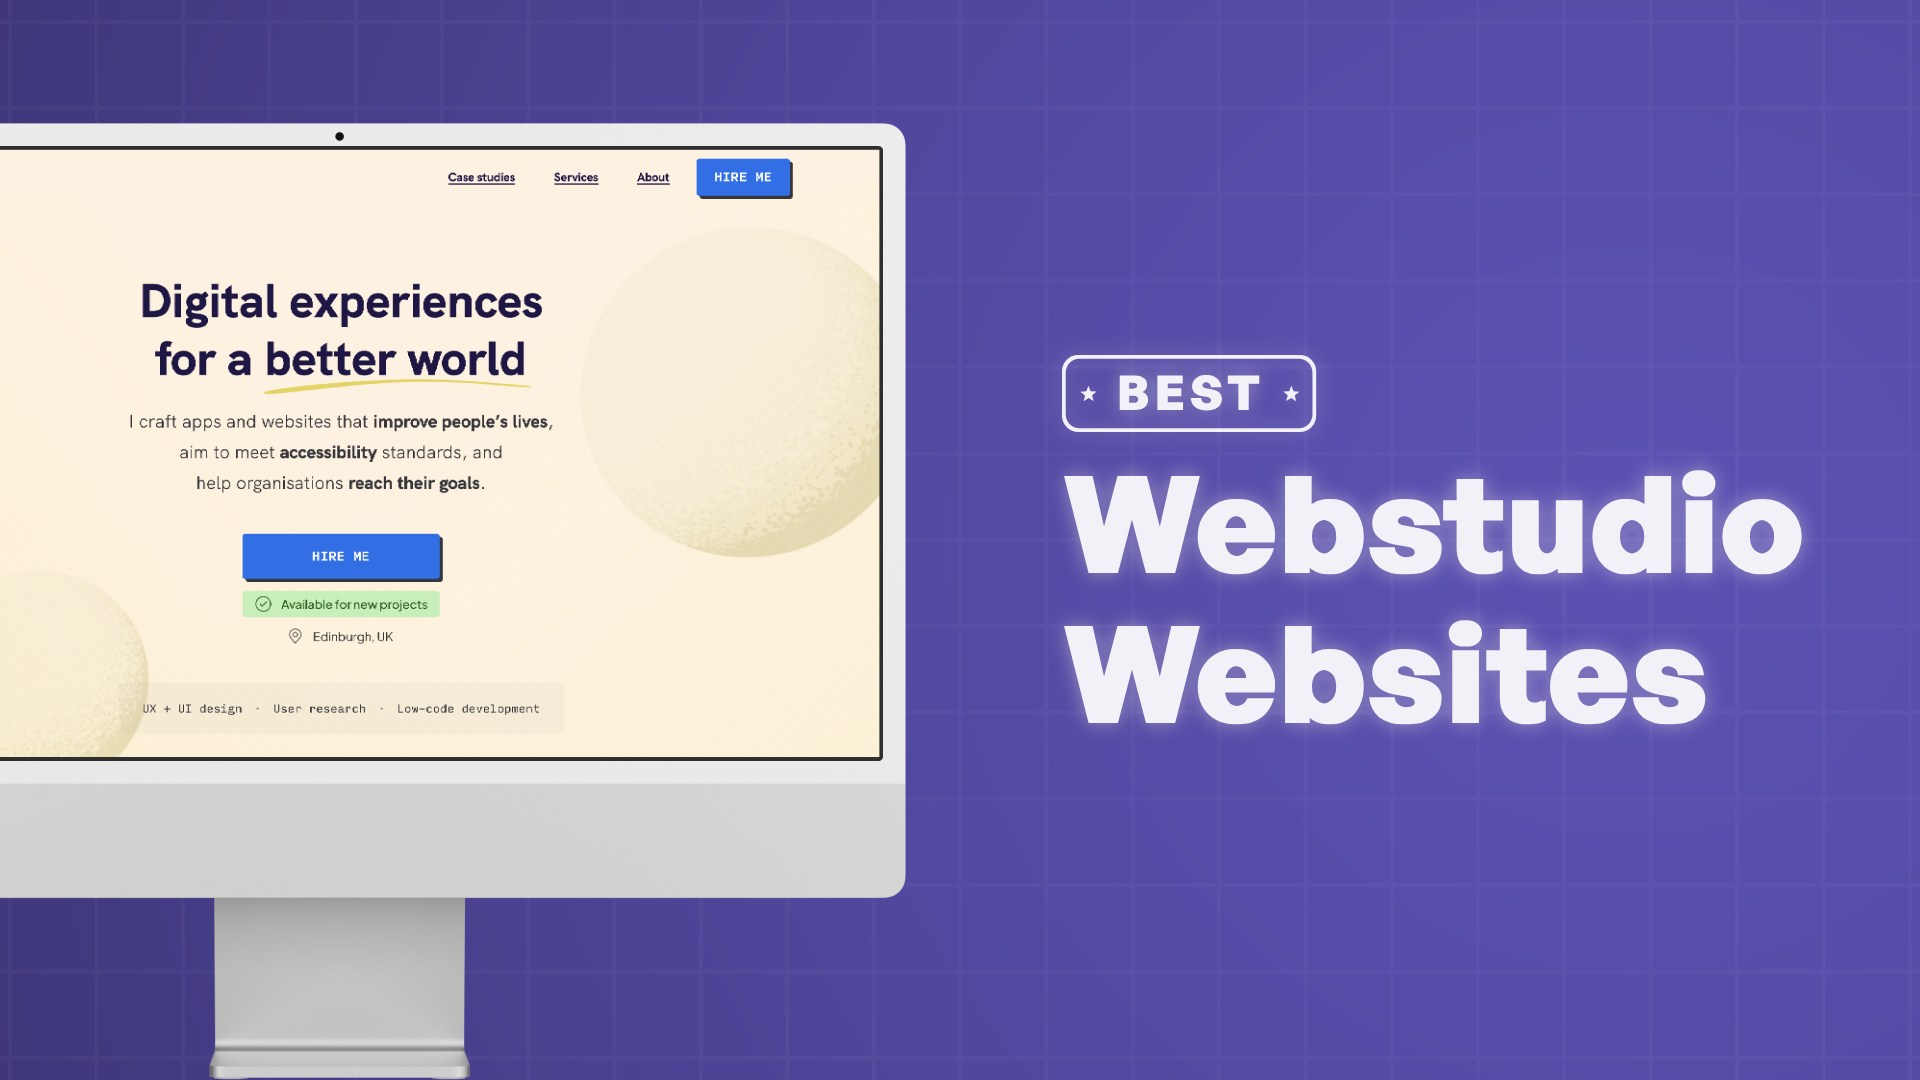 "Best Website Websites" with a screenshot of a Webstudio website